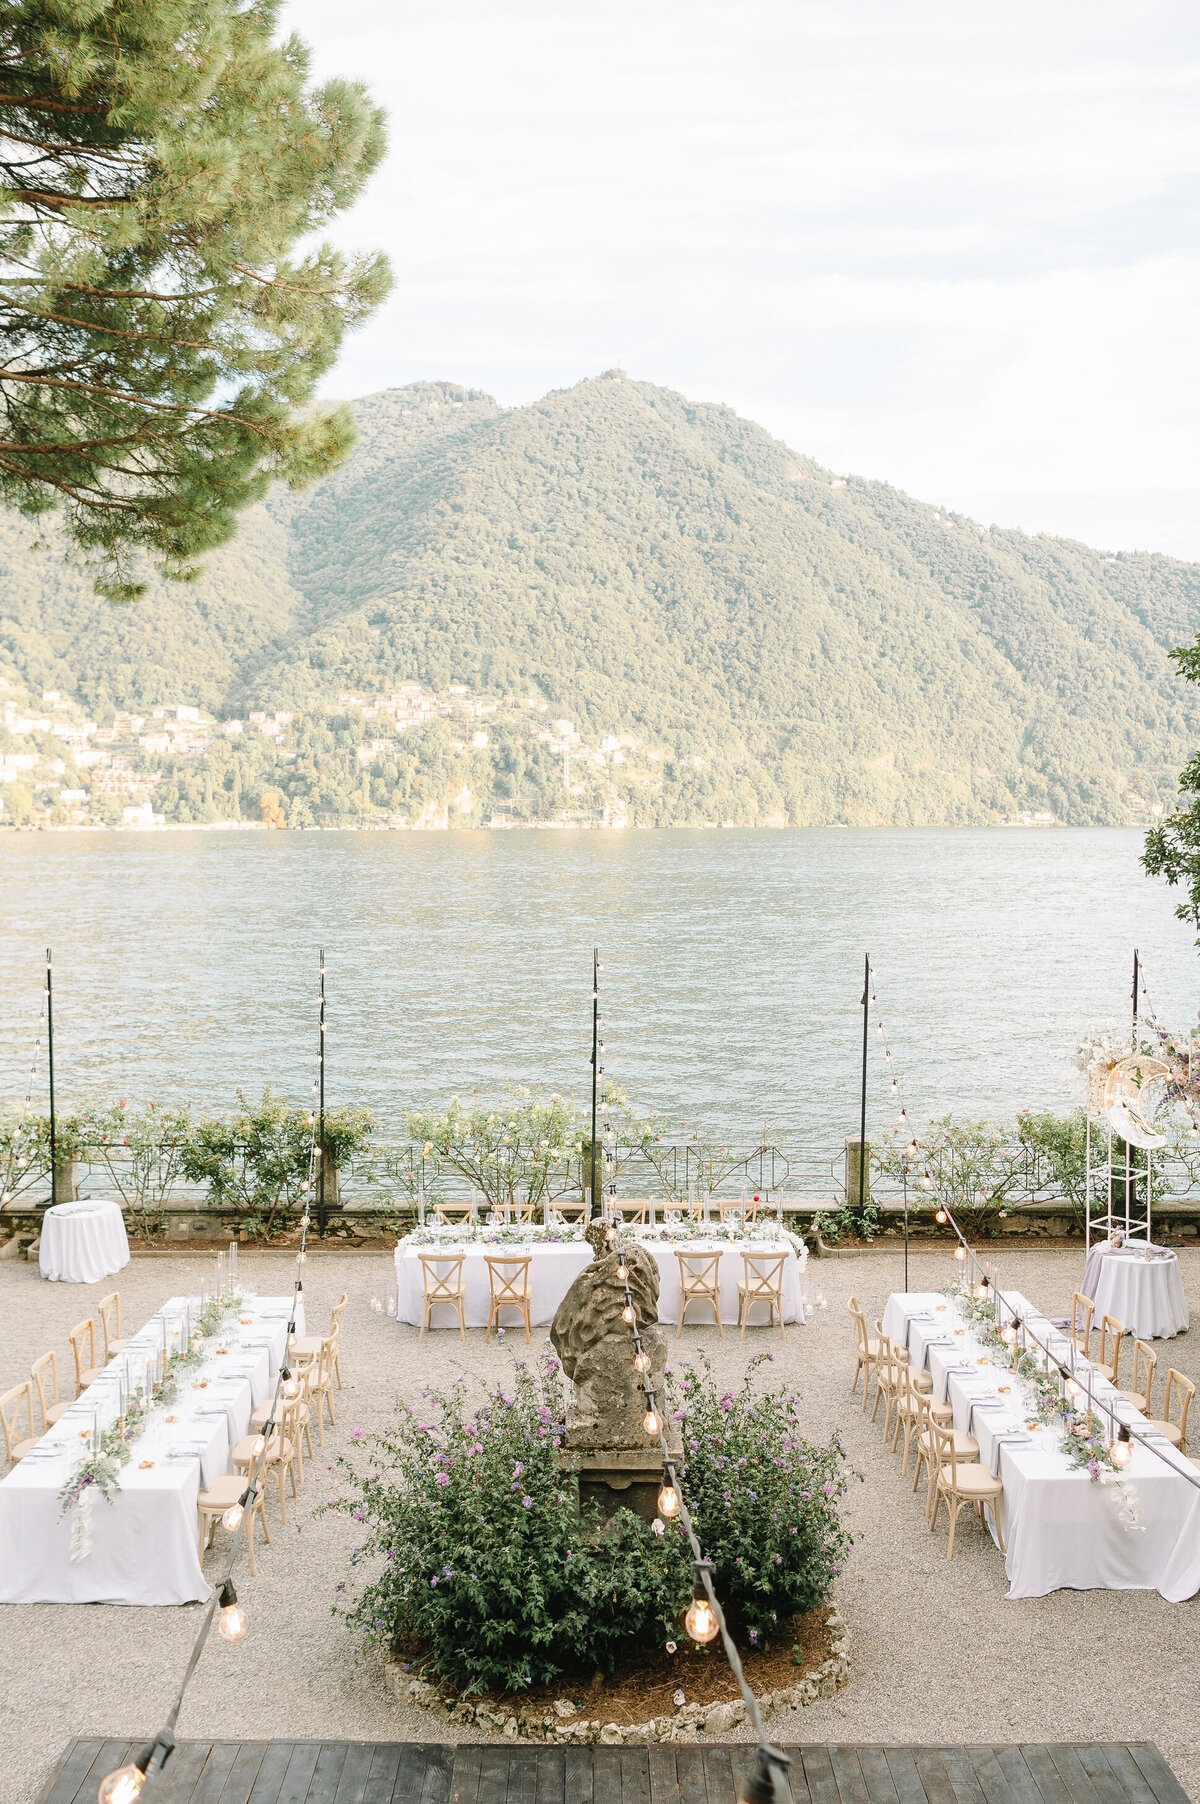 Breathtaking Vistas from the Lakeside Wedding Reception